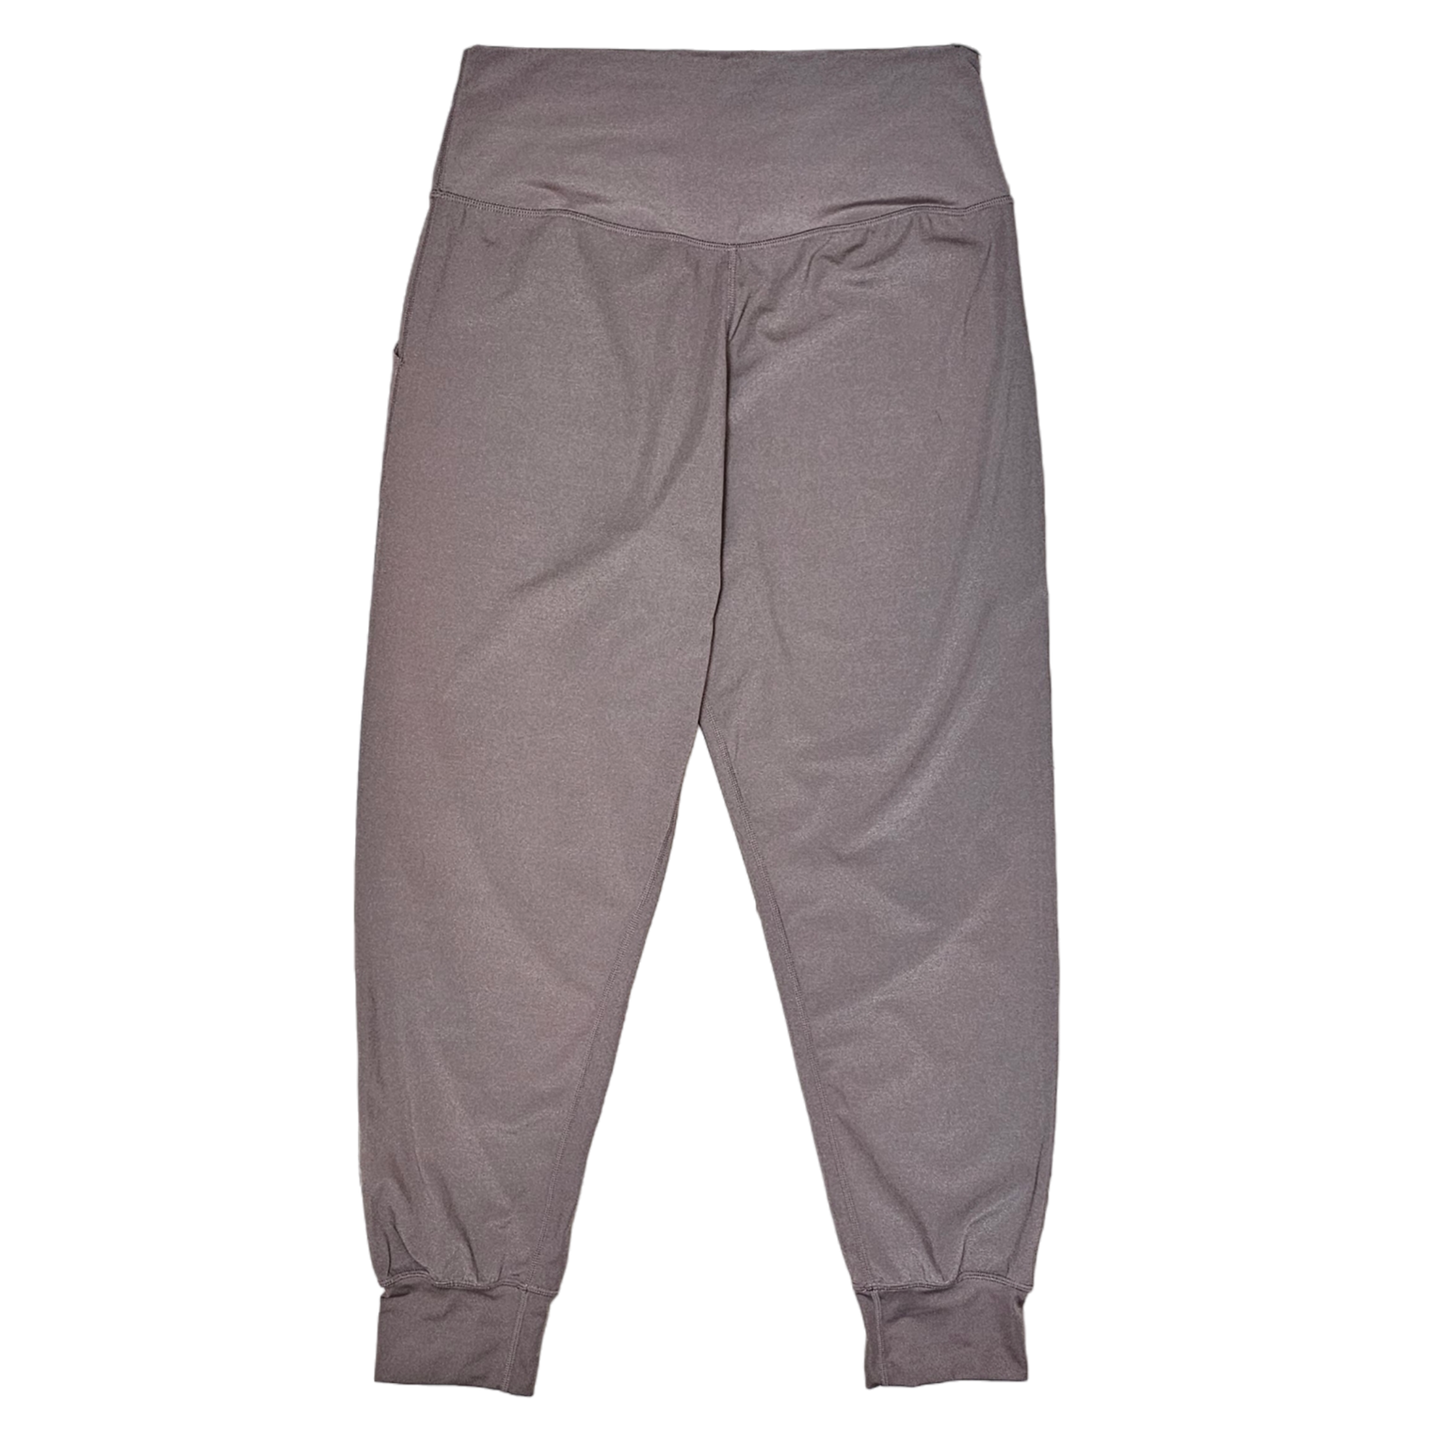 Athletic Pants By COLORFULKOALA Size: Xl